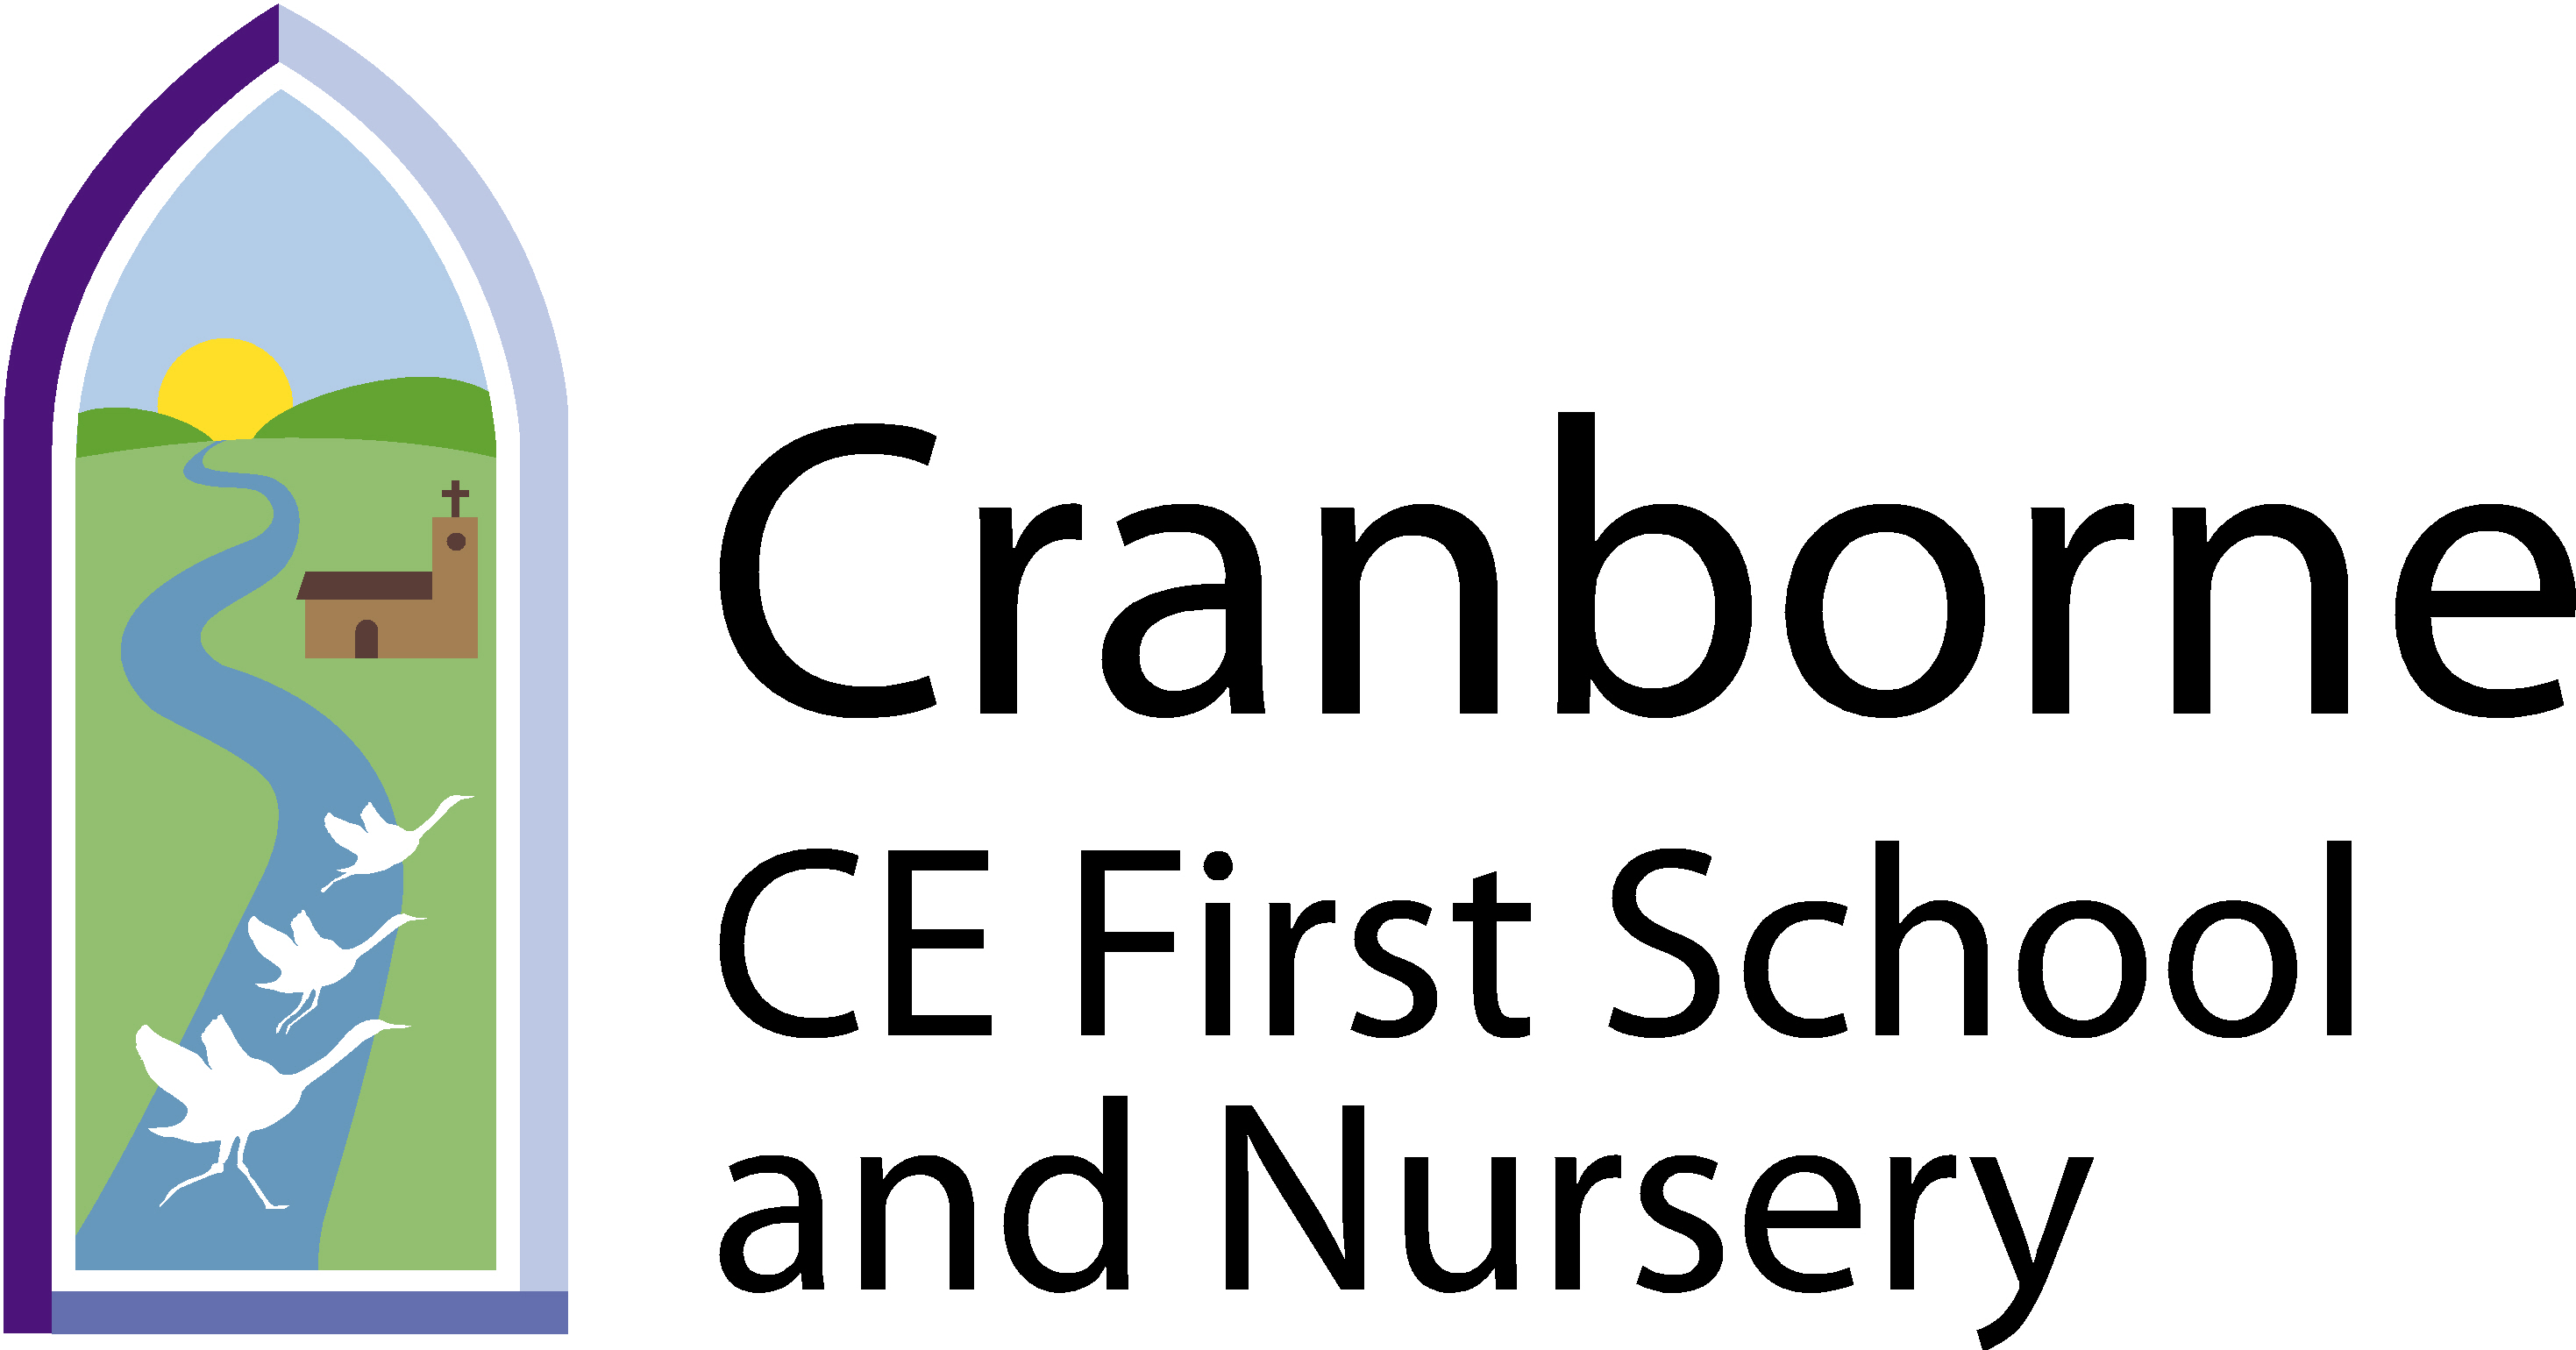 Cranborne CE First School with Nursery logo.JPG